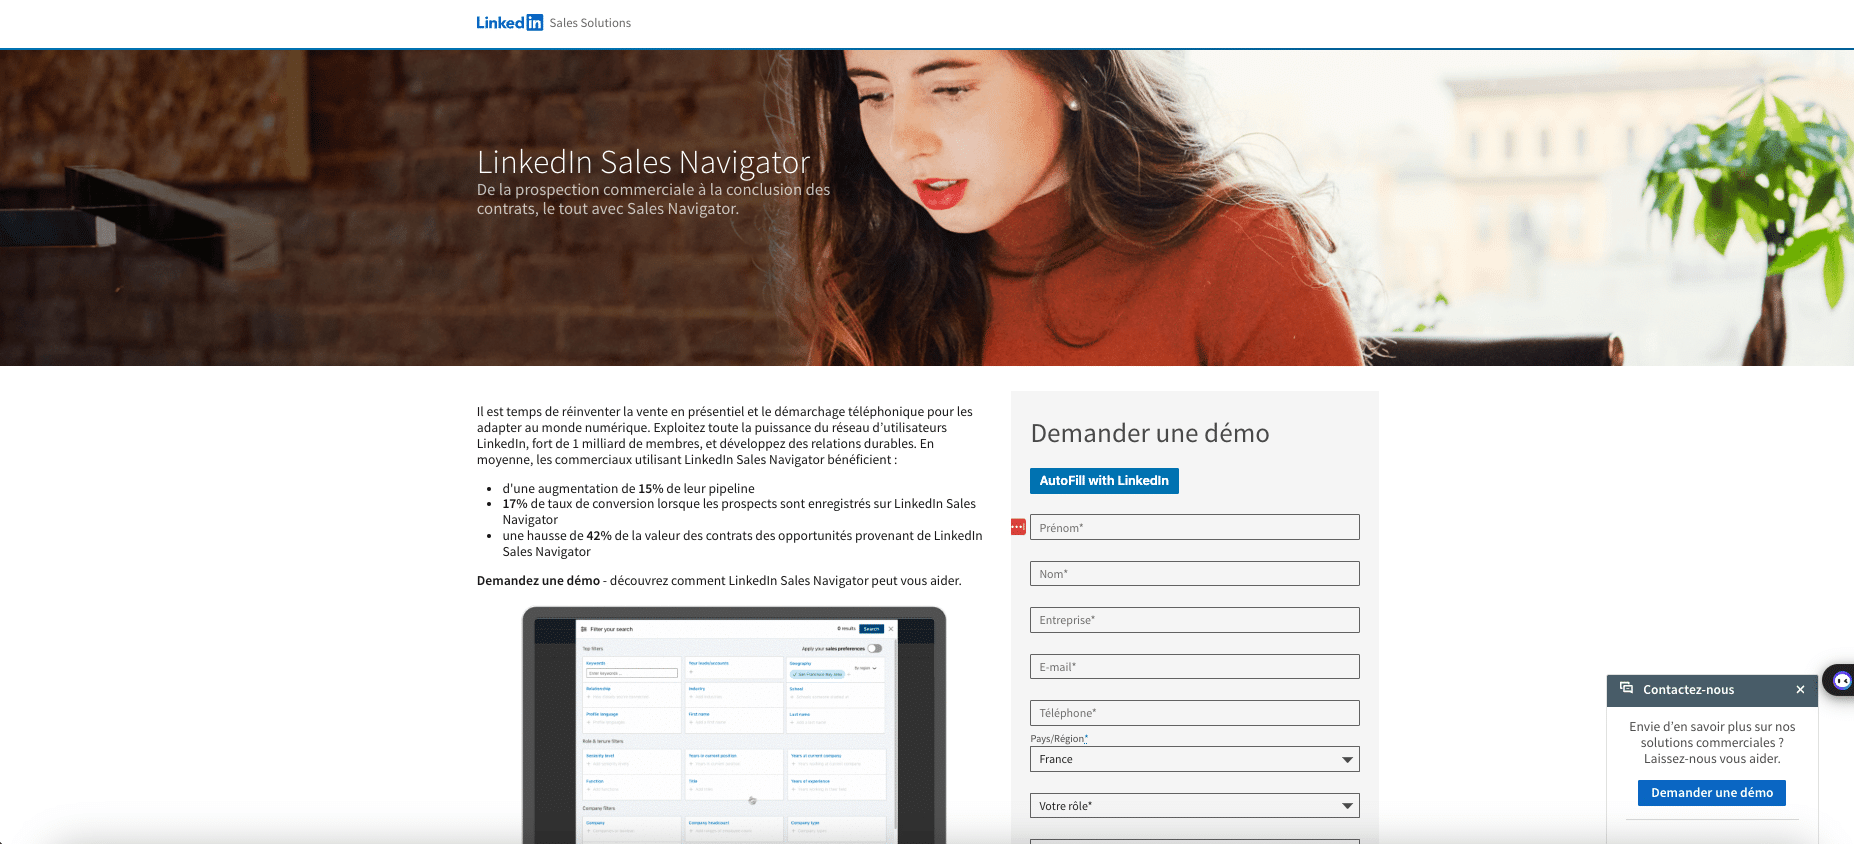 Page d'accueil LinkedIn Sales Navigator.